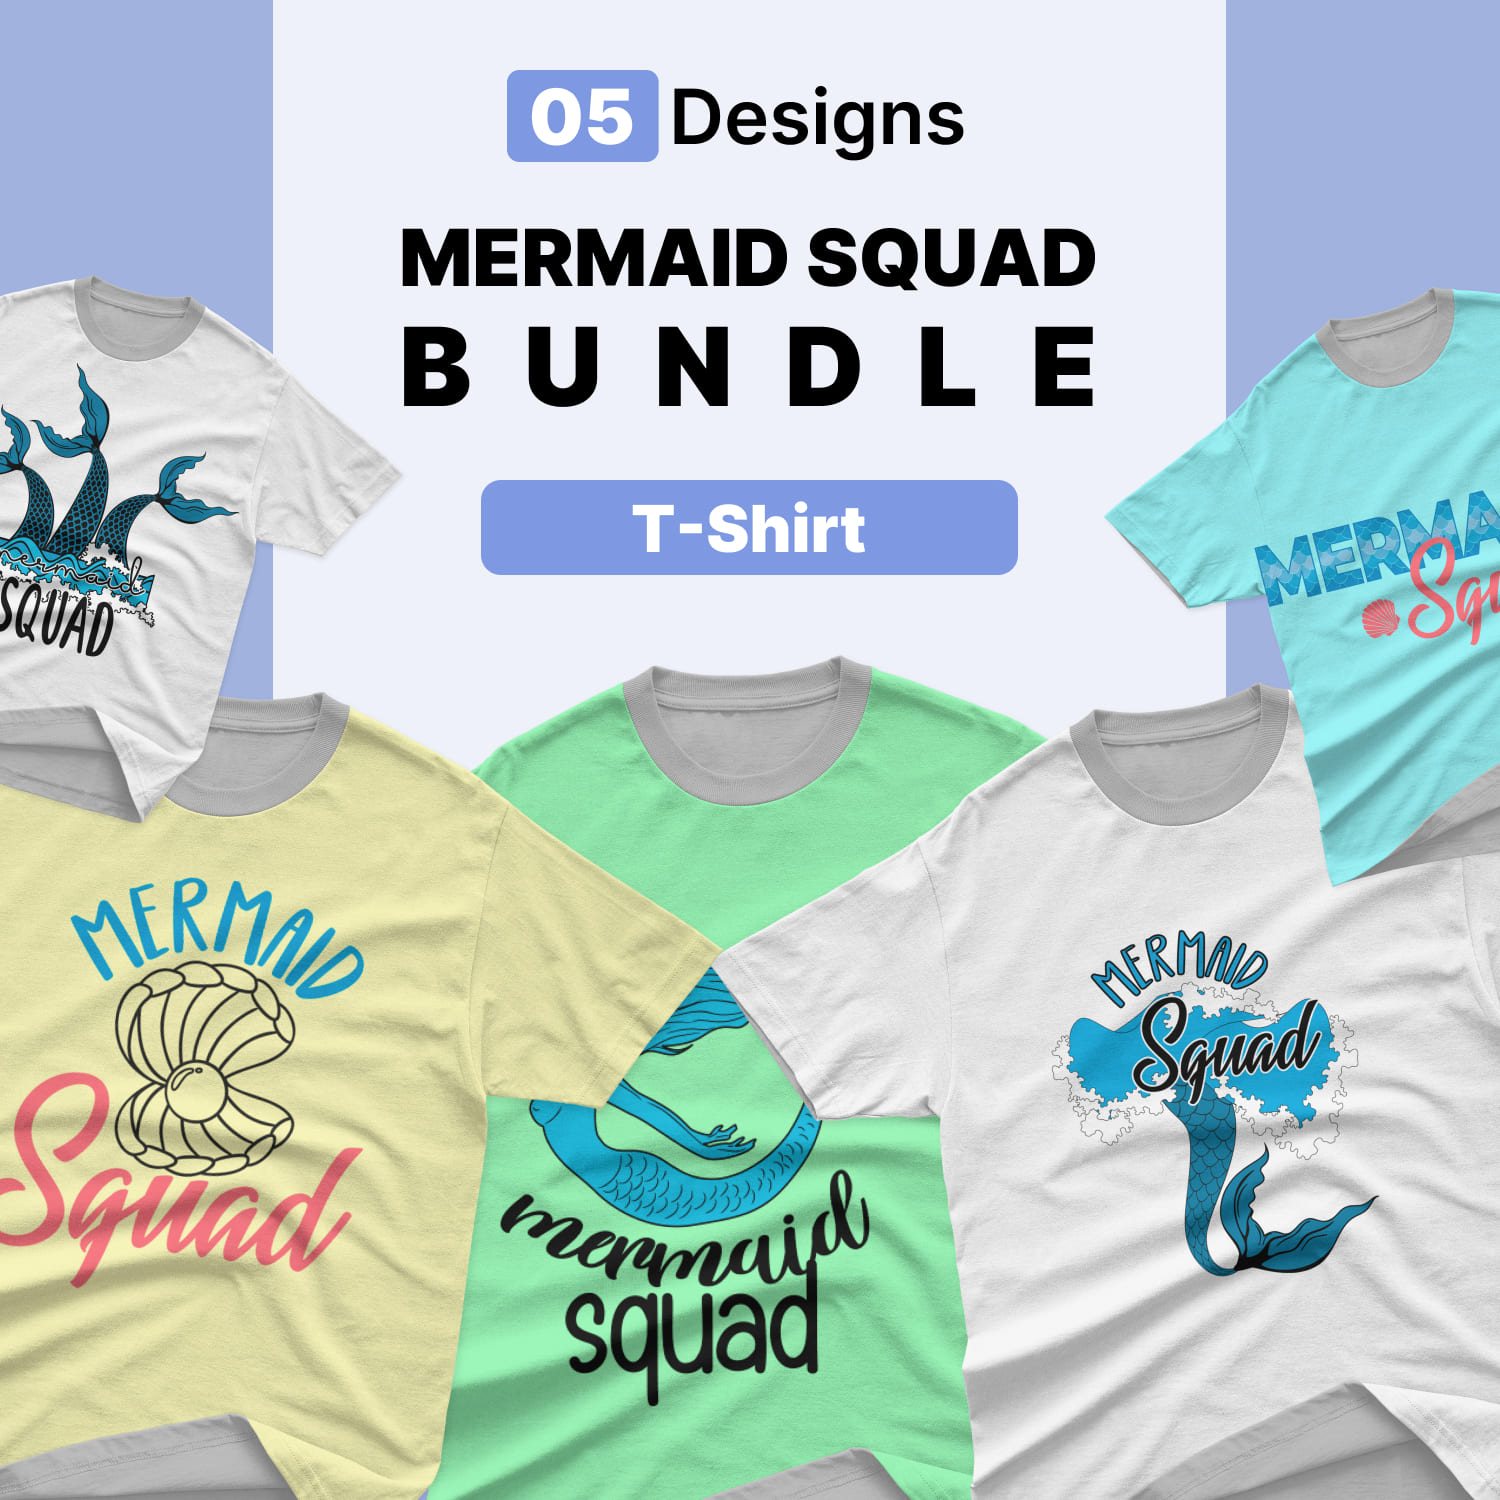 Prints of images mermaid squad.